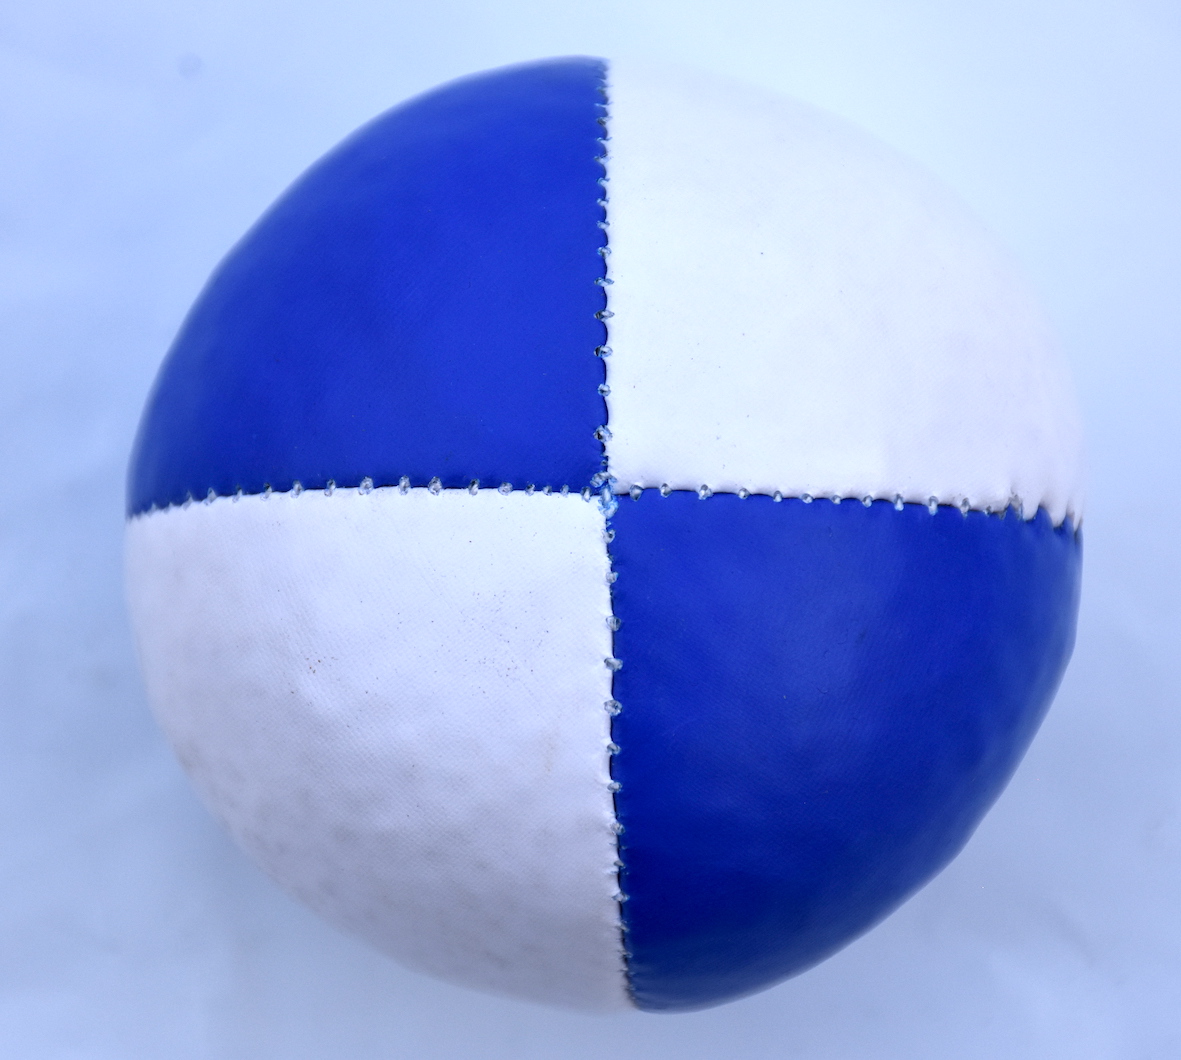 Softball 130g white/blue